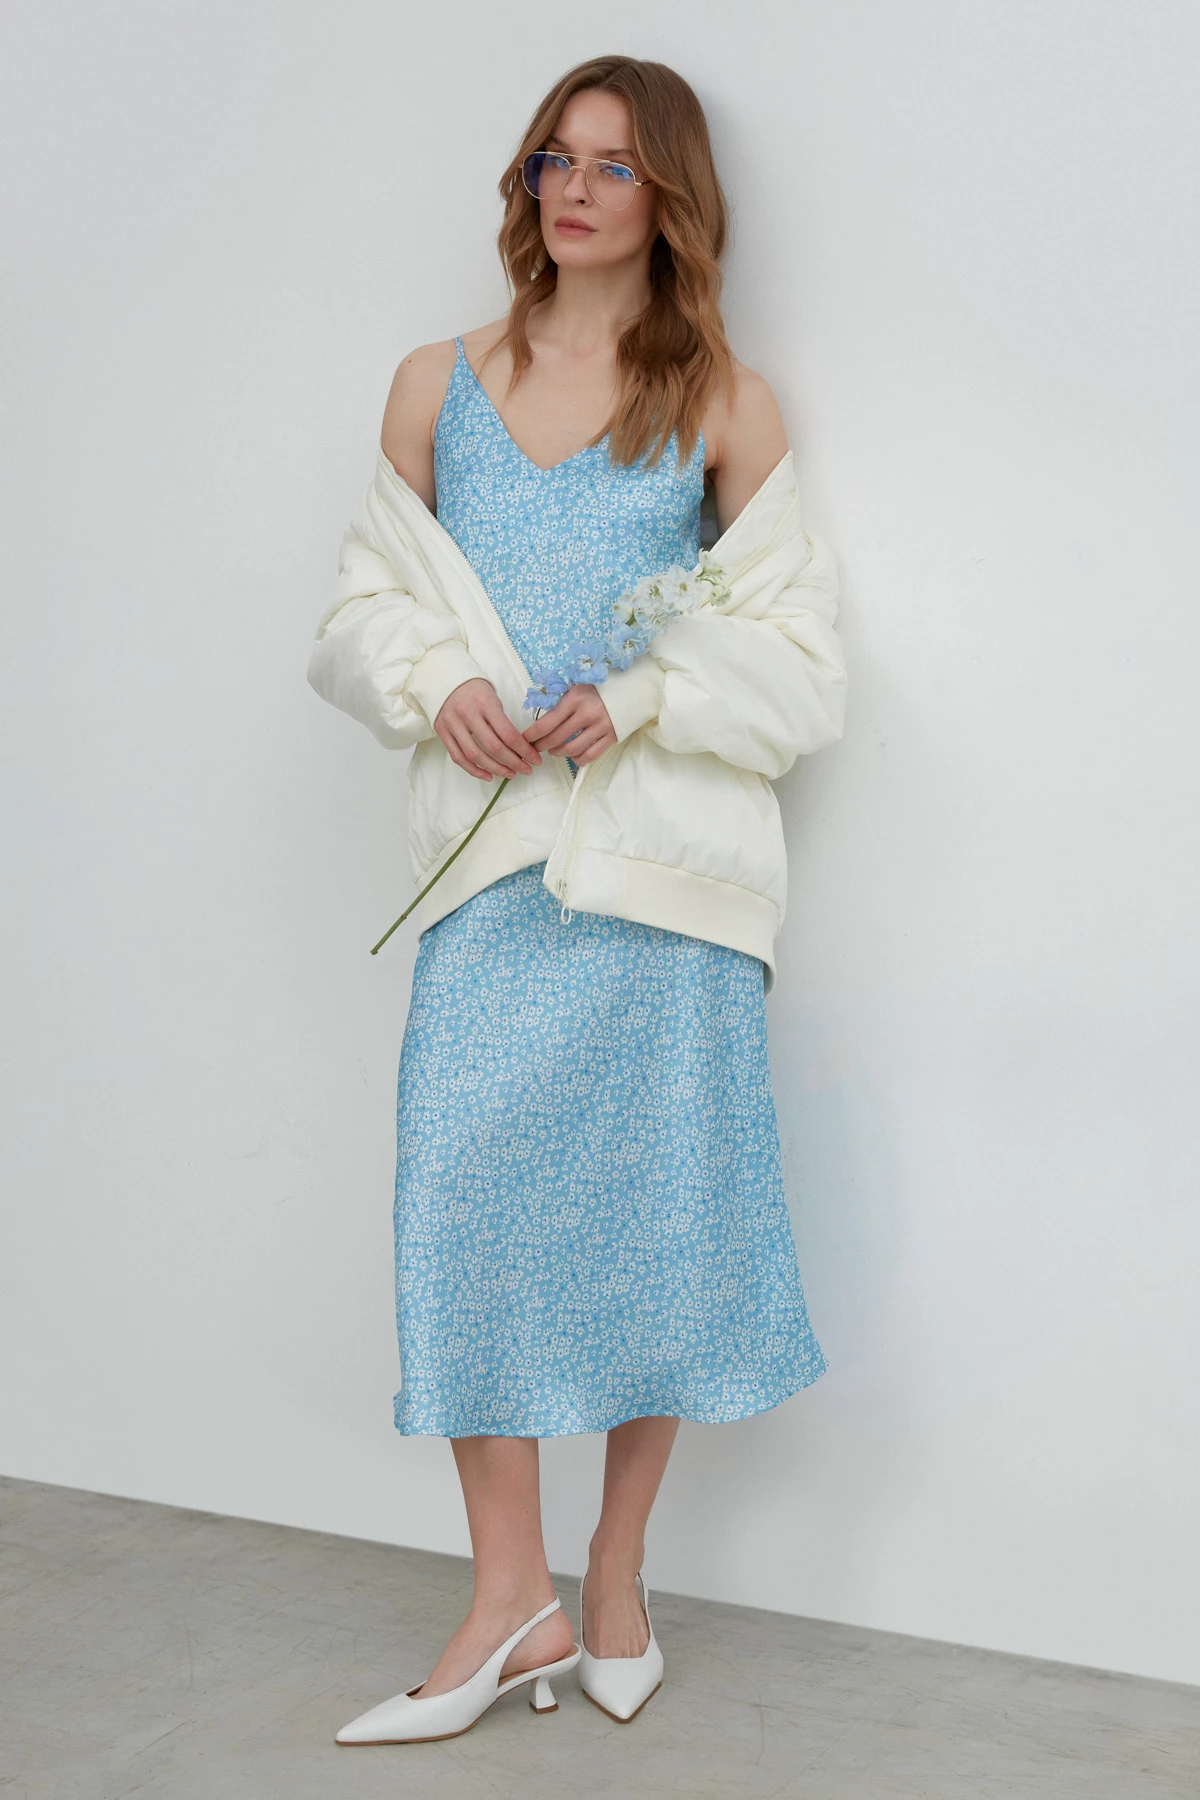 Blue satin midi lenght slip dress in "milky flowers" print, photo 7